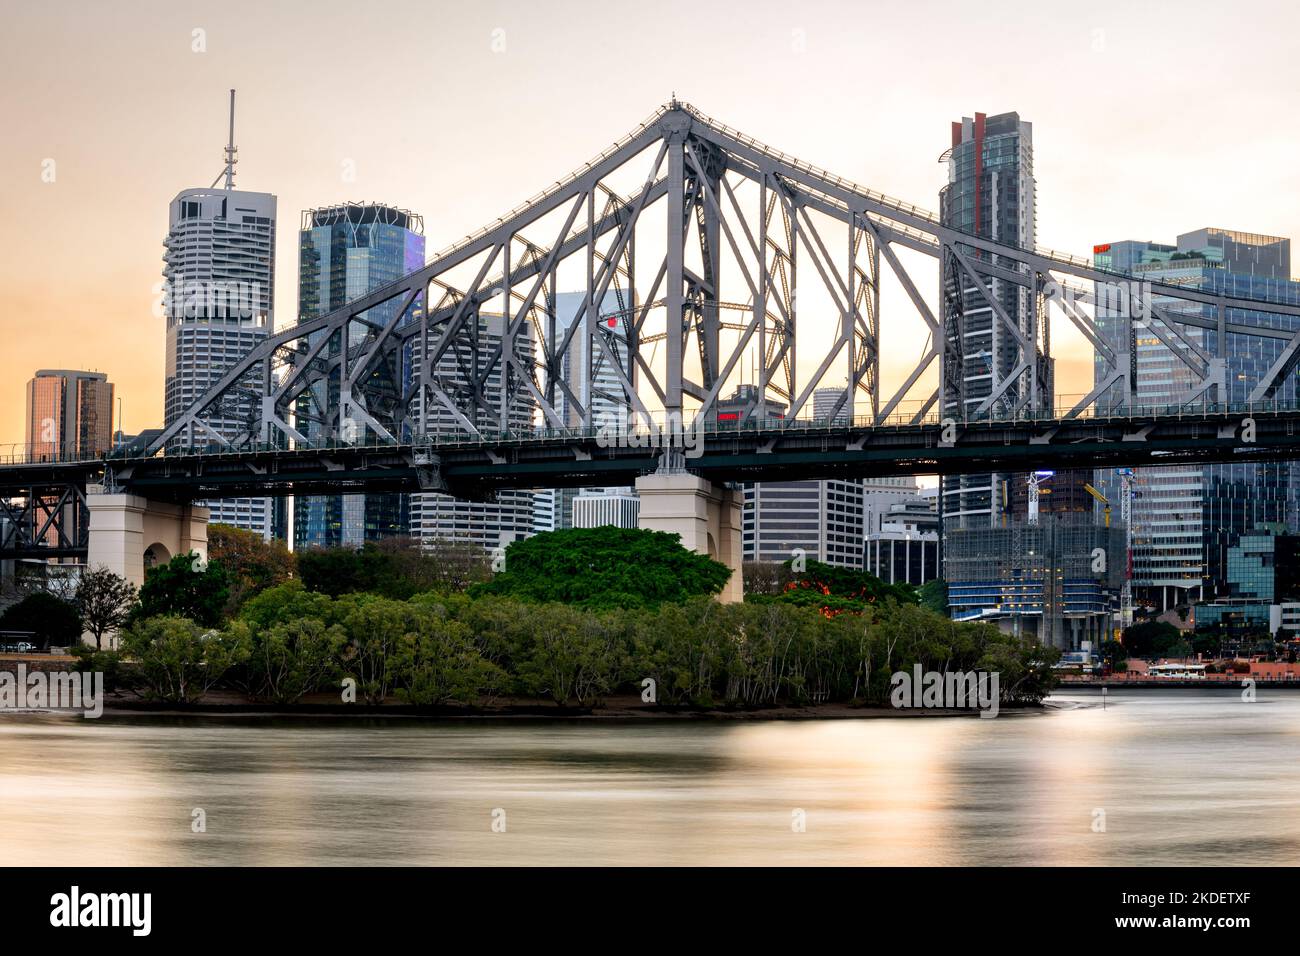 Heritage-listed Story Bridge in Brisbane. Stock Photo